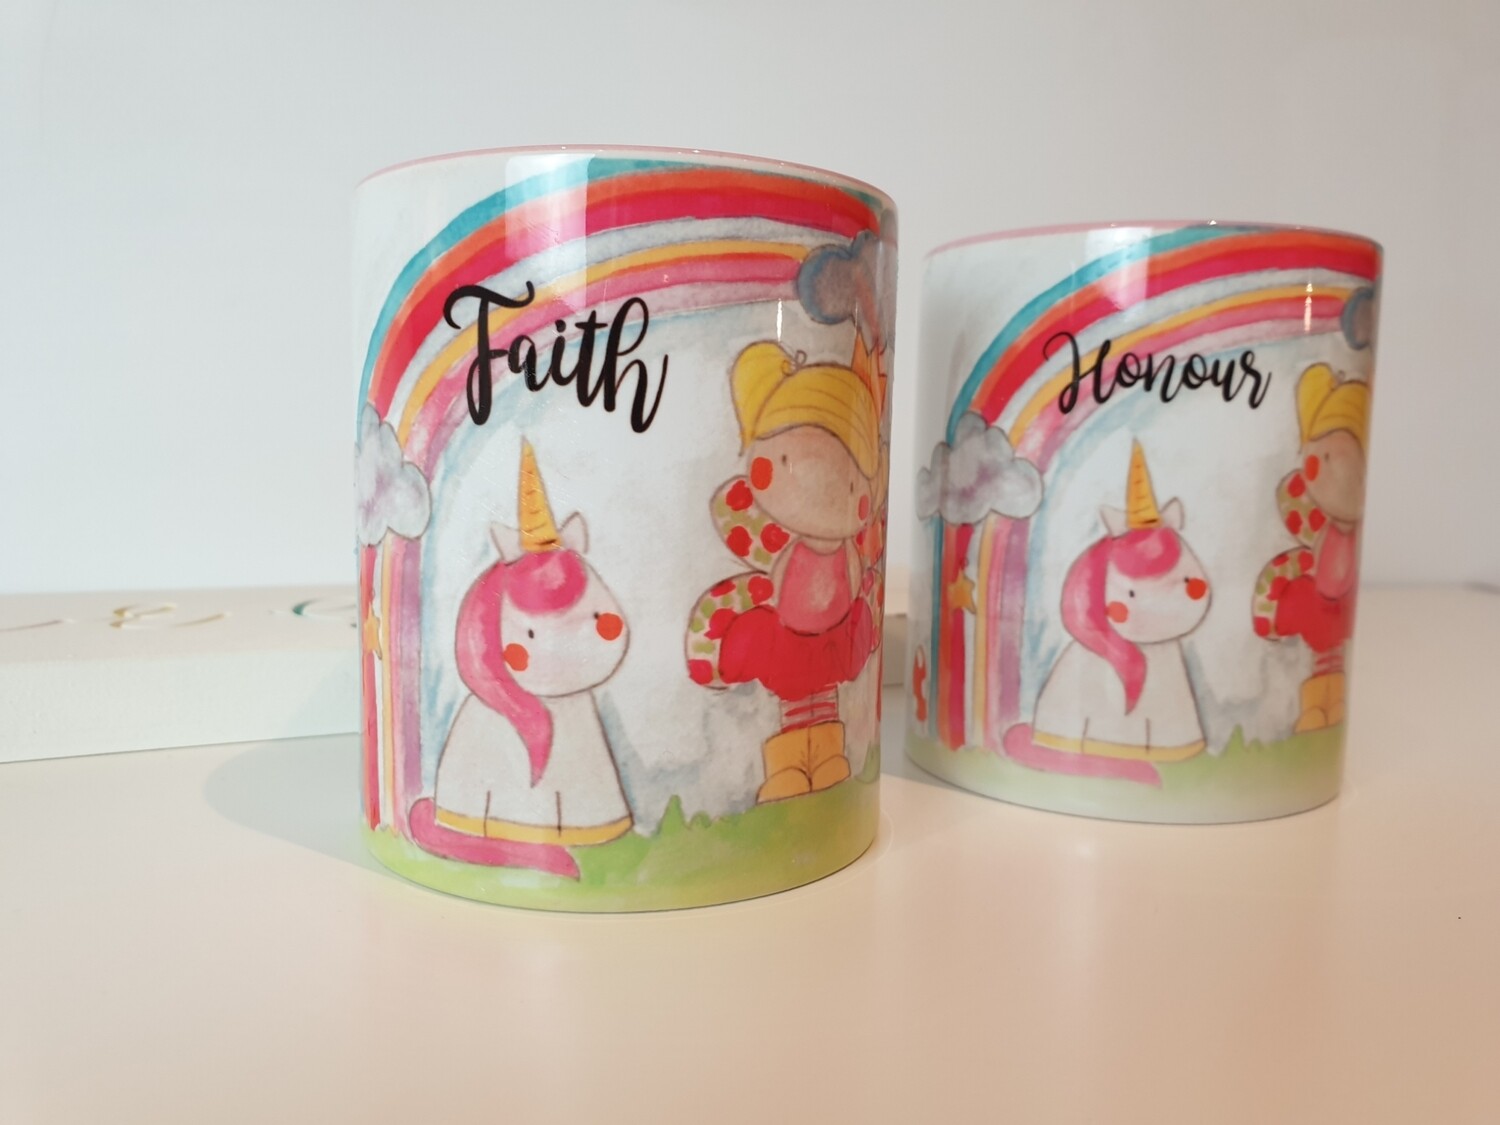 Fairy and unicorn mug